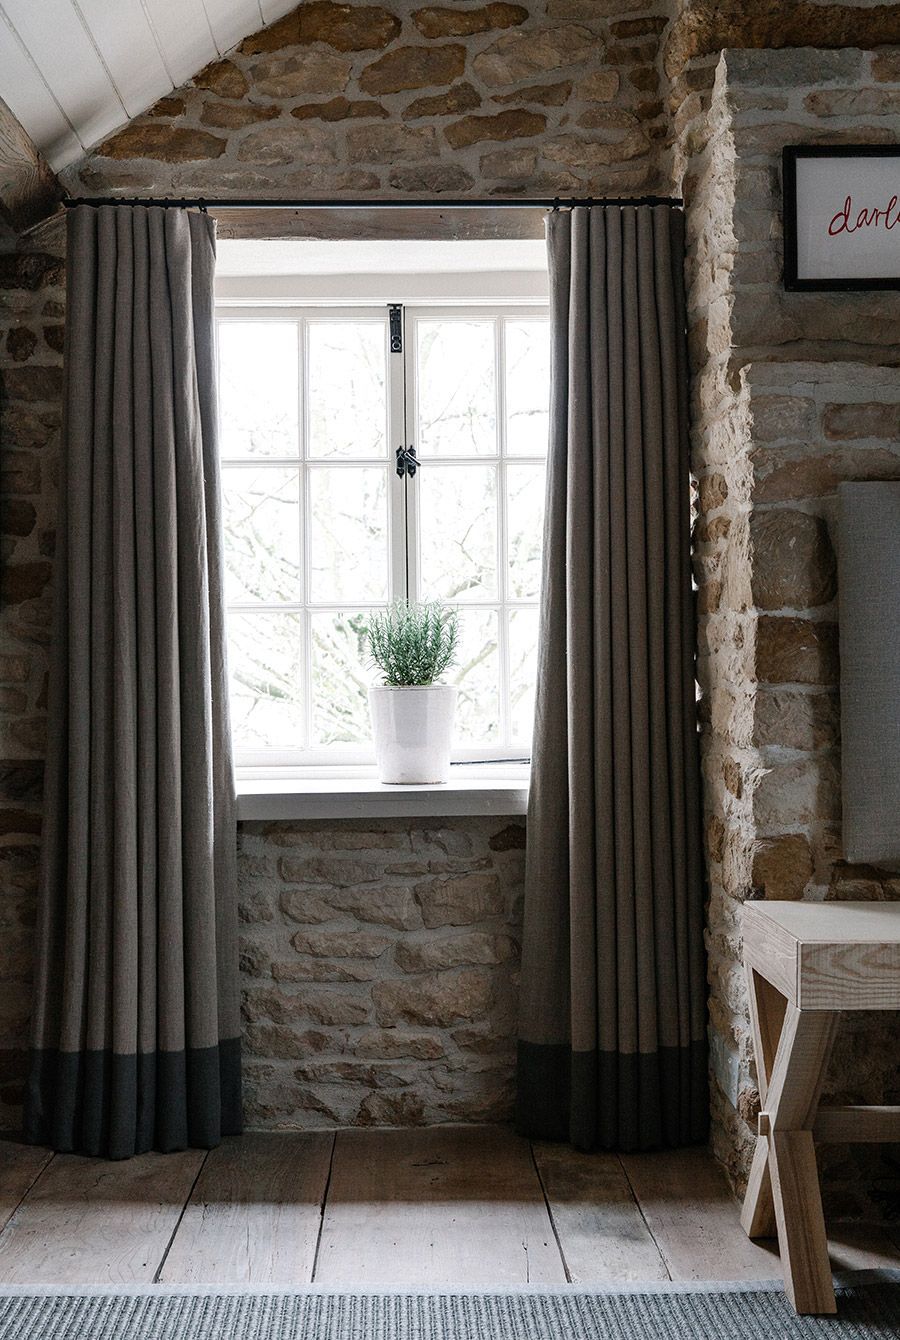 Cottage | Window | Stone | Rustic | Decor |Daylesford & The Wild Rabbit on Cereal Magazine -   21 rustic decor curtains
 ideas